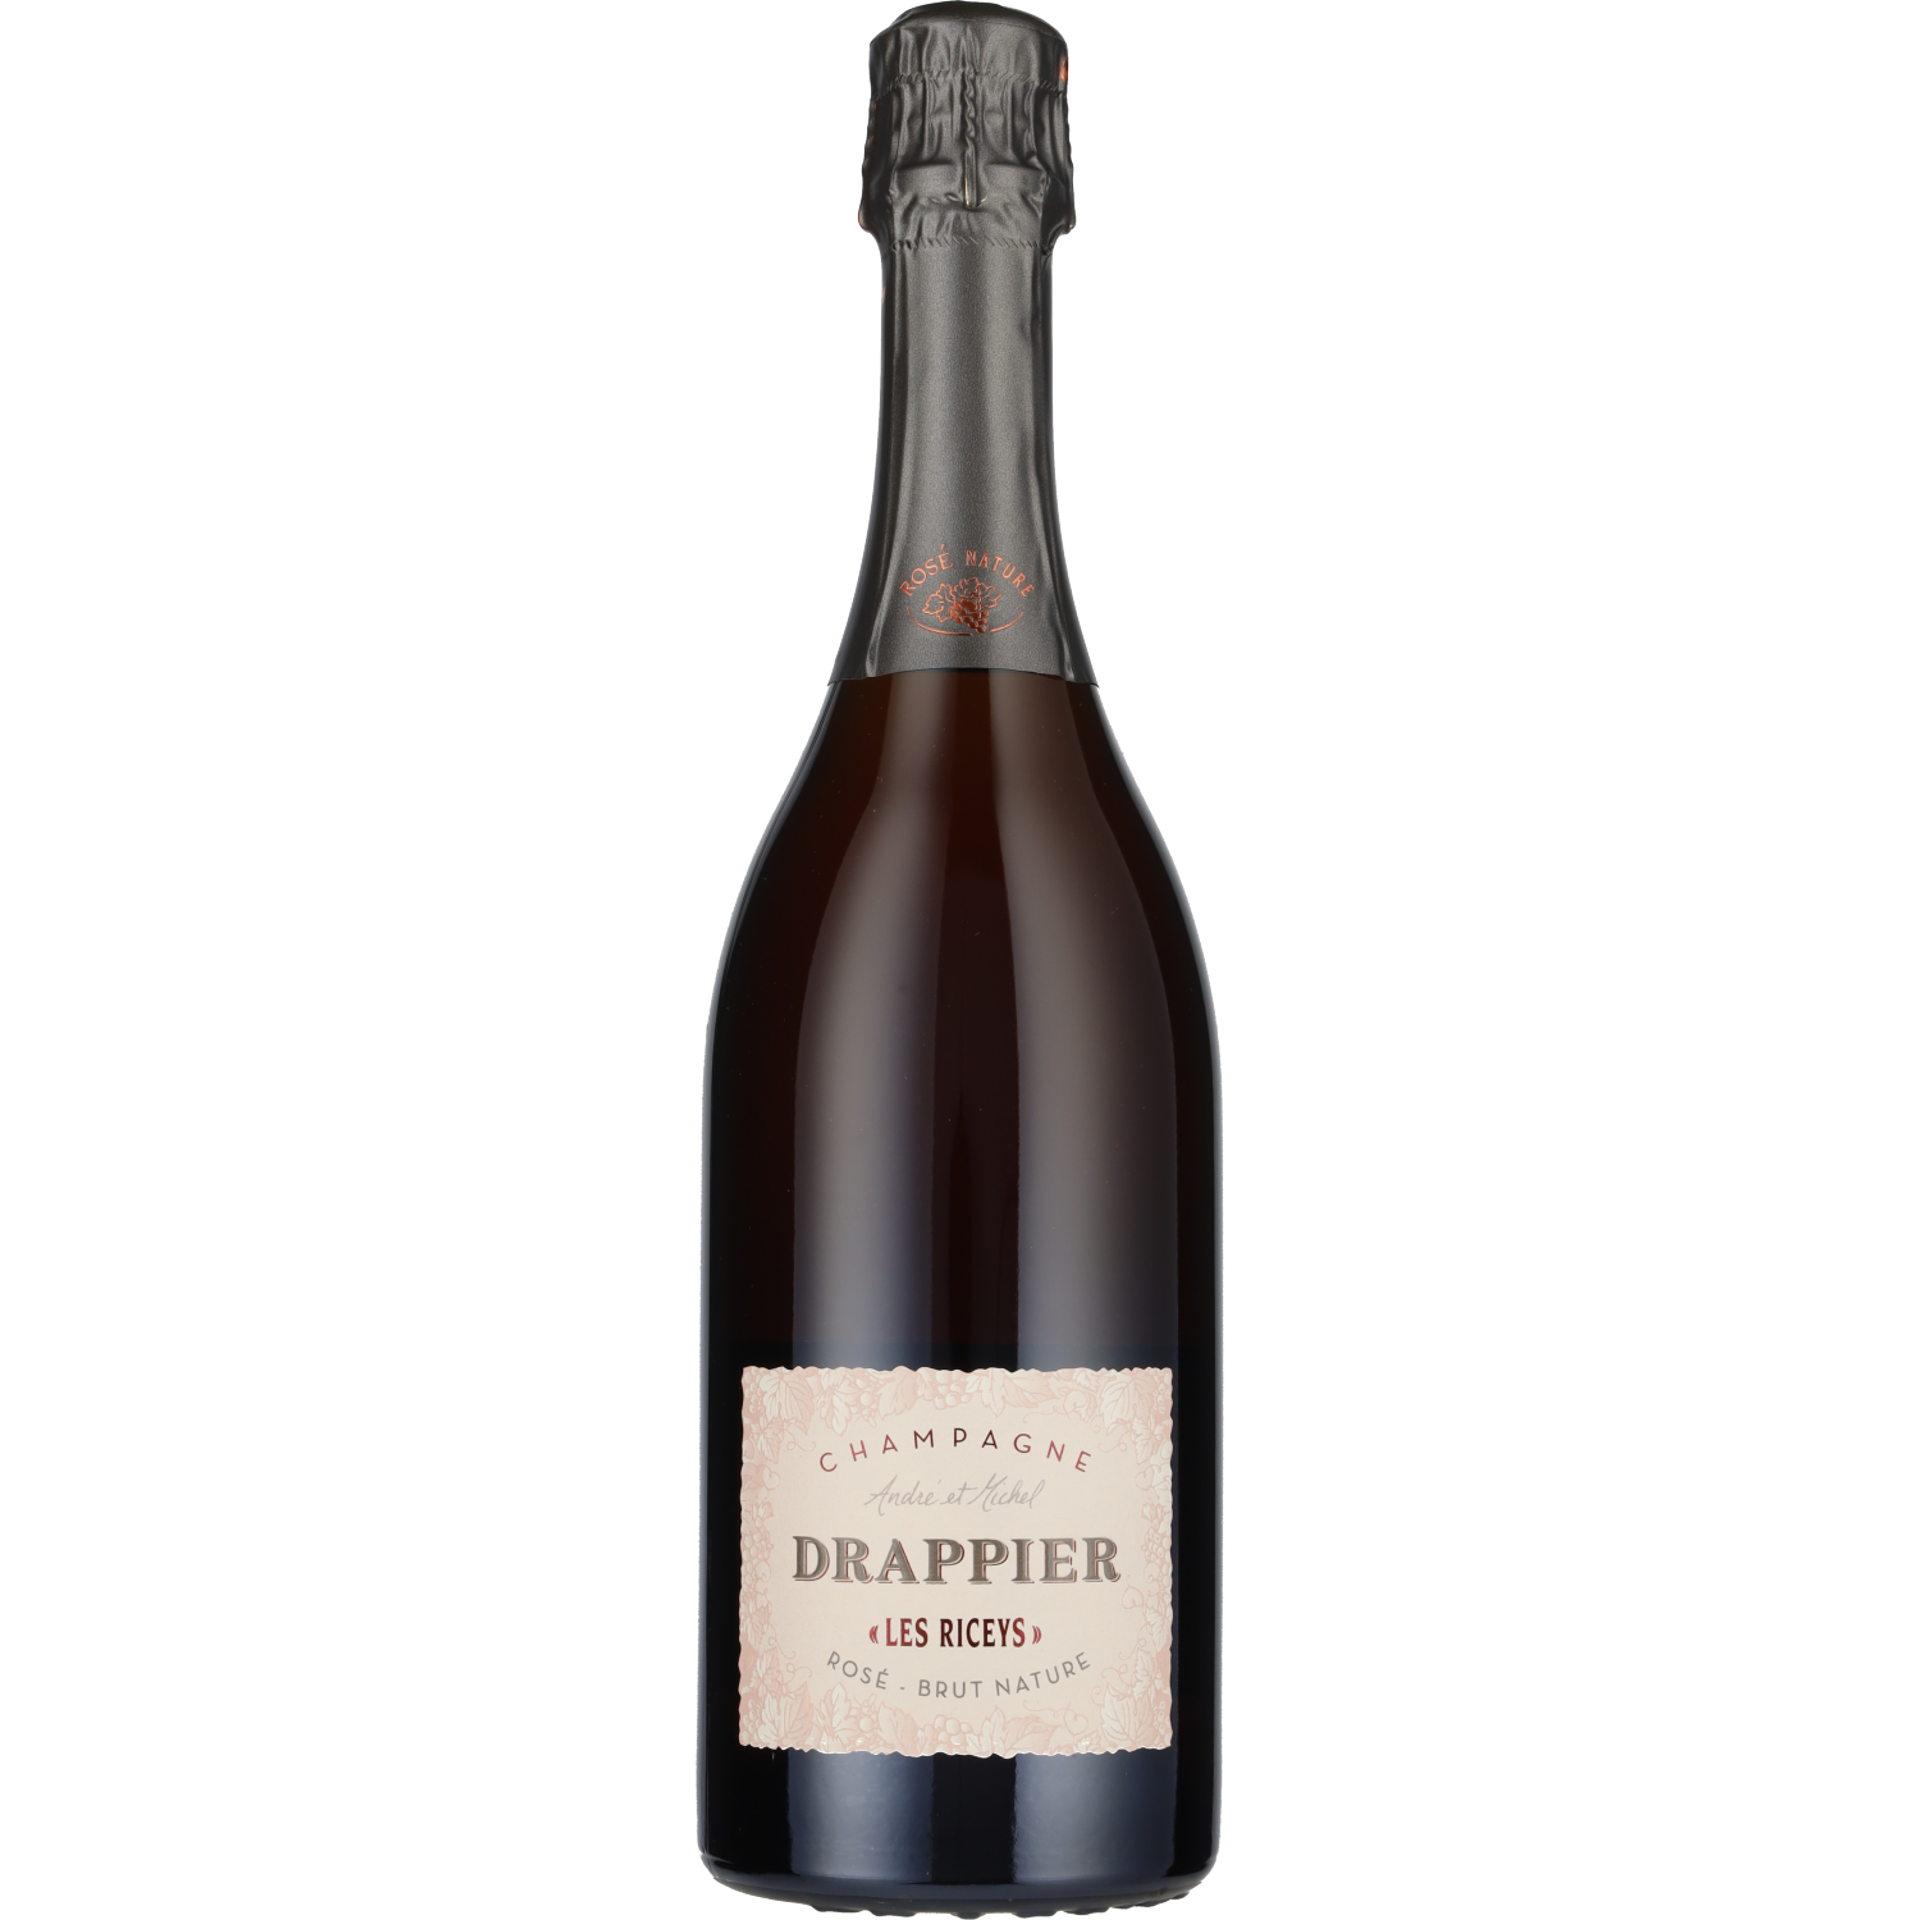 Champagner Drappier Brut Nature Rosé, Les Riceys